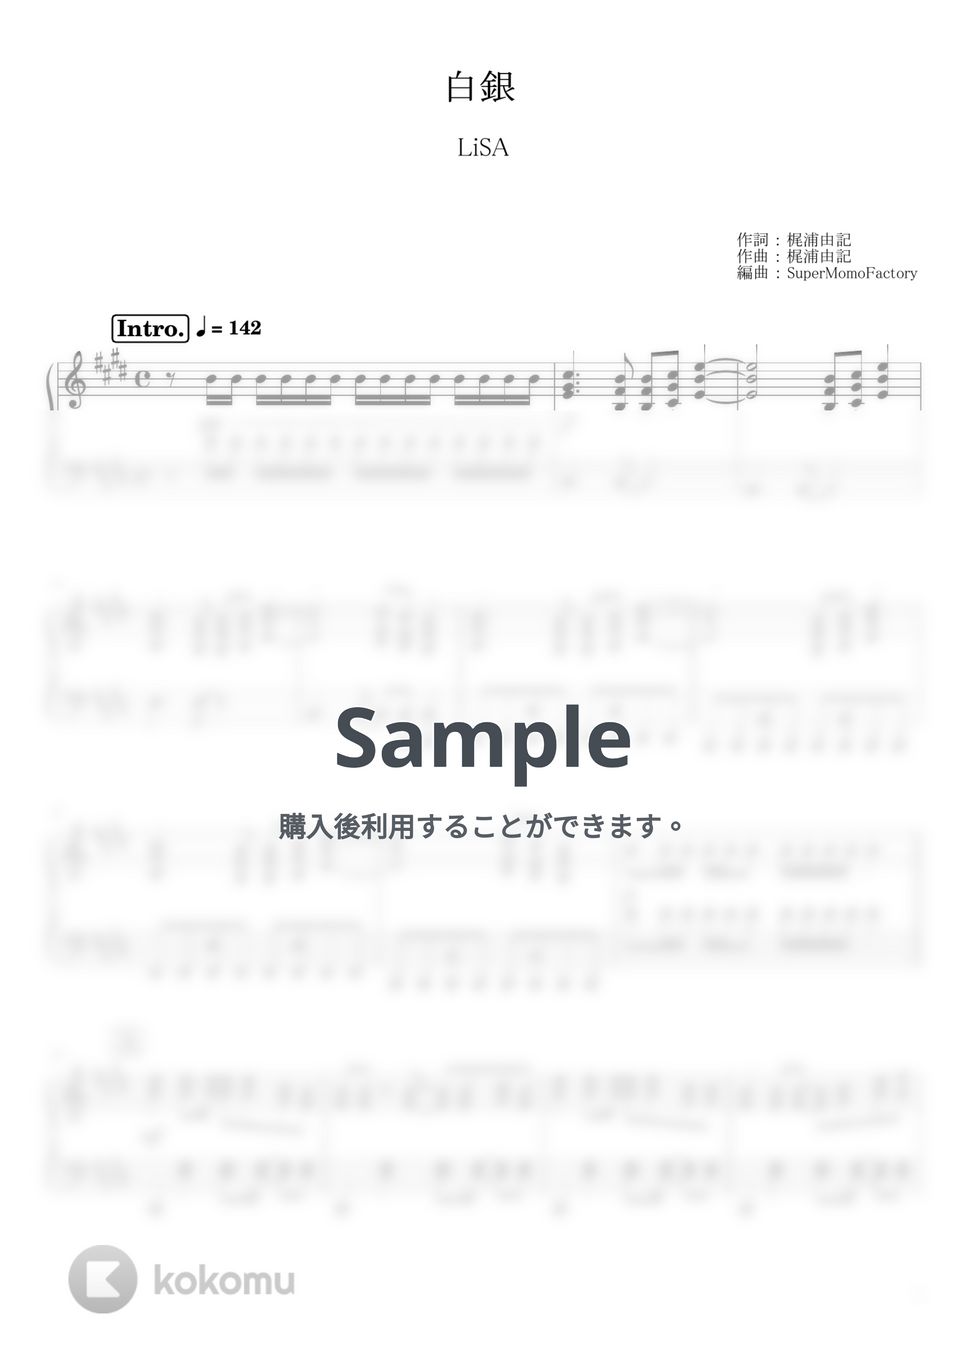 LiSA - 白銀 (ピアノソロ / 上級) by SuperMomoFactory